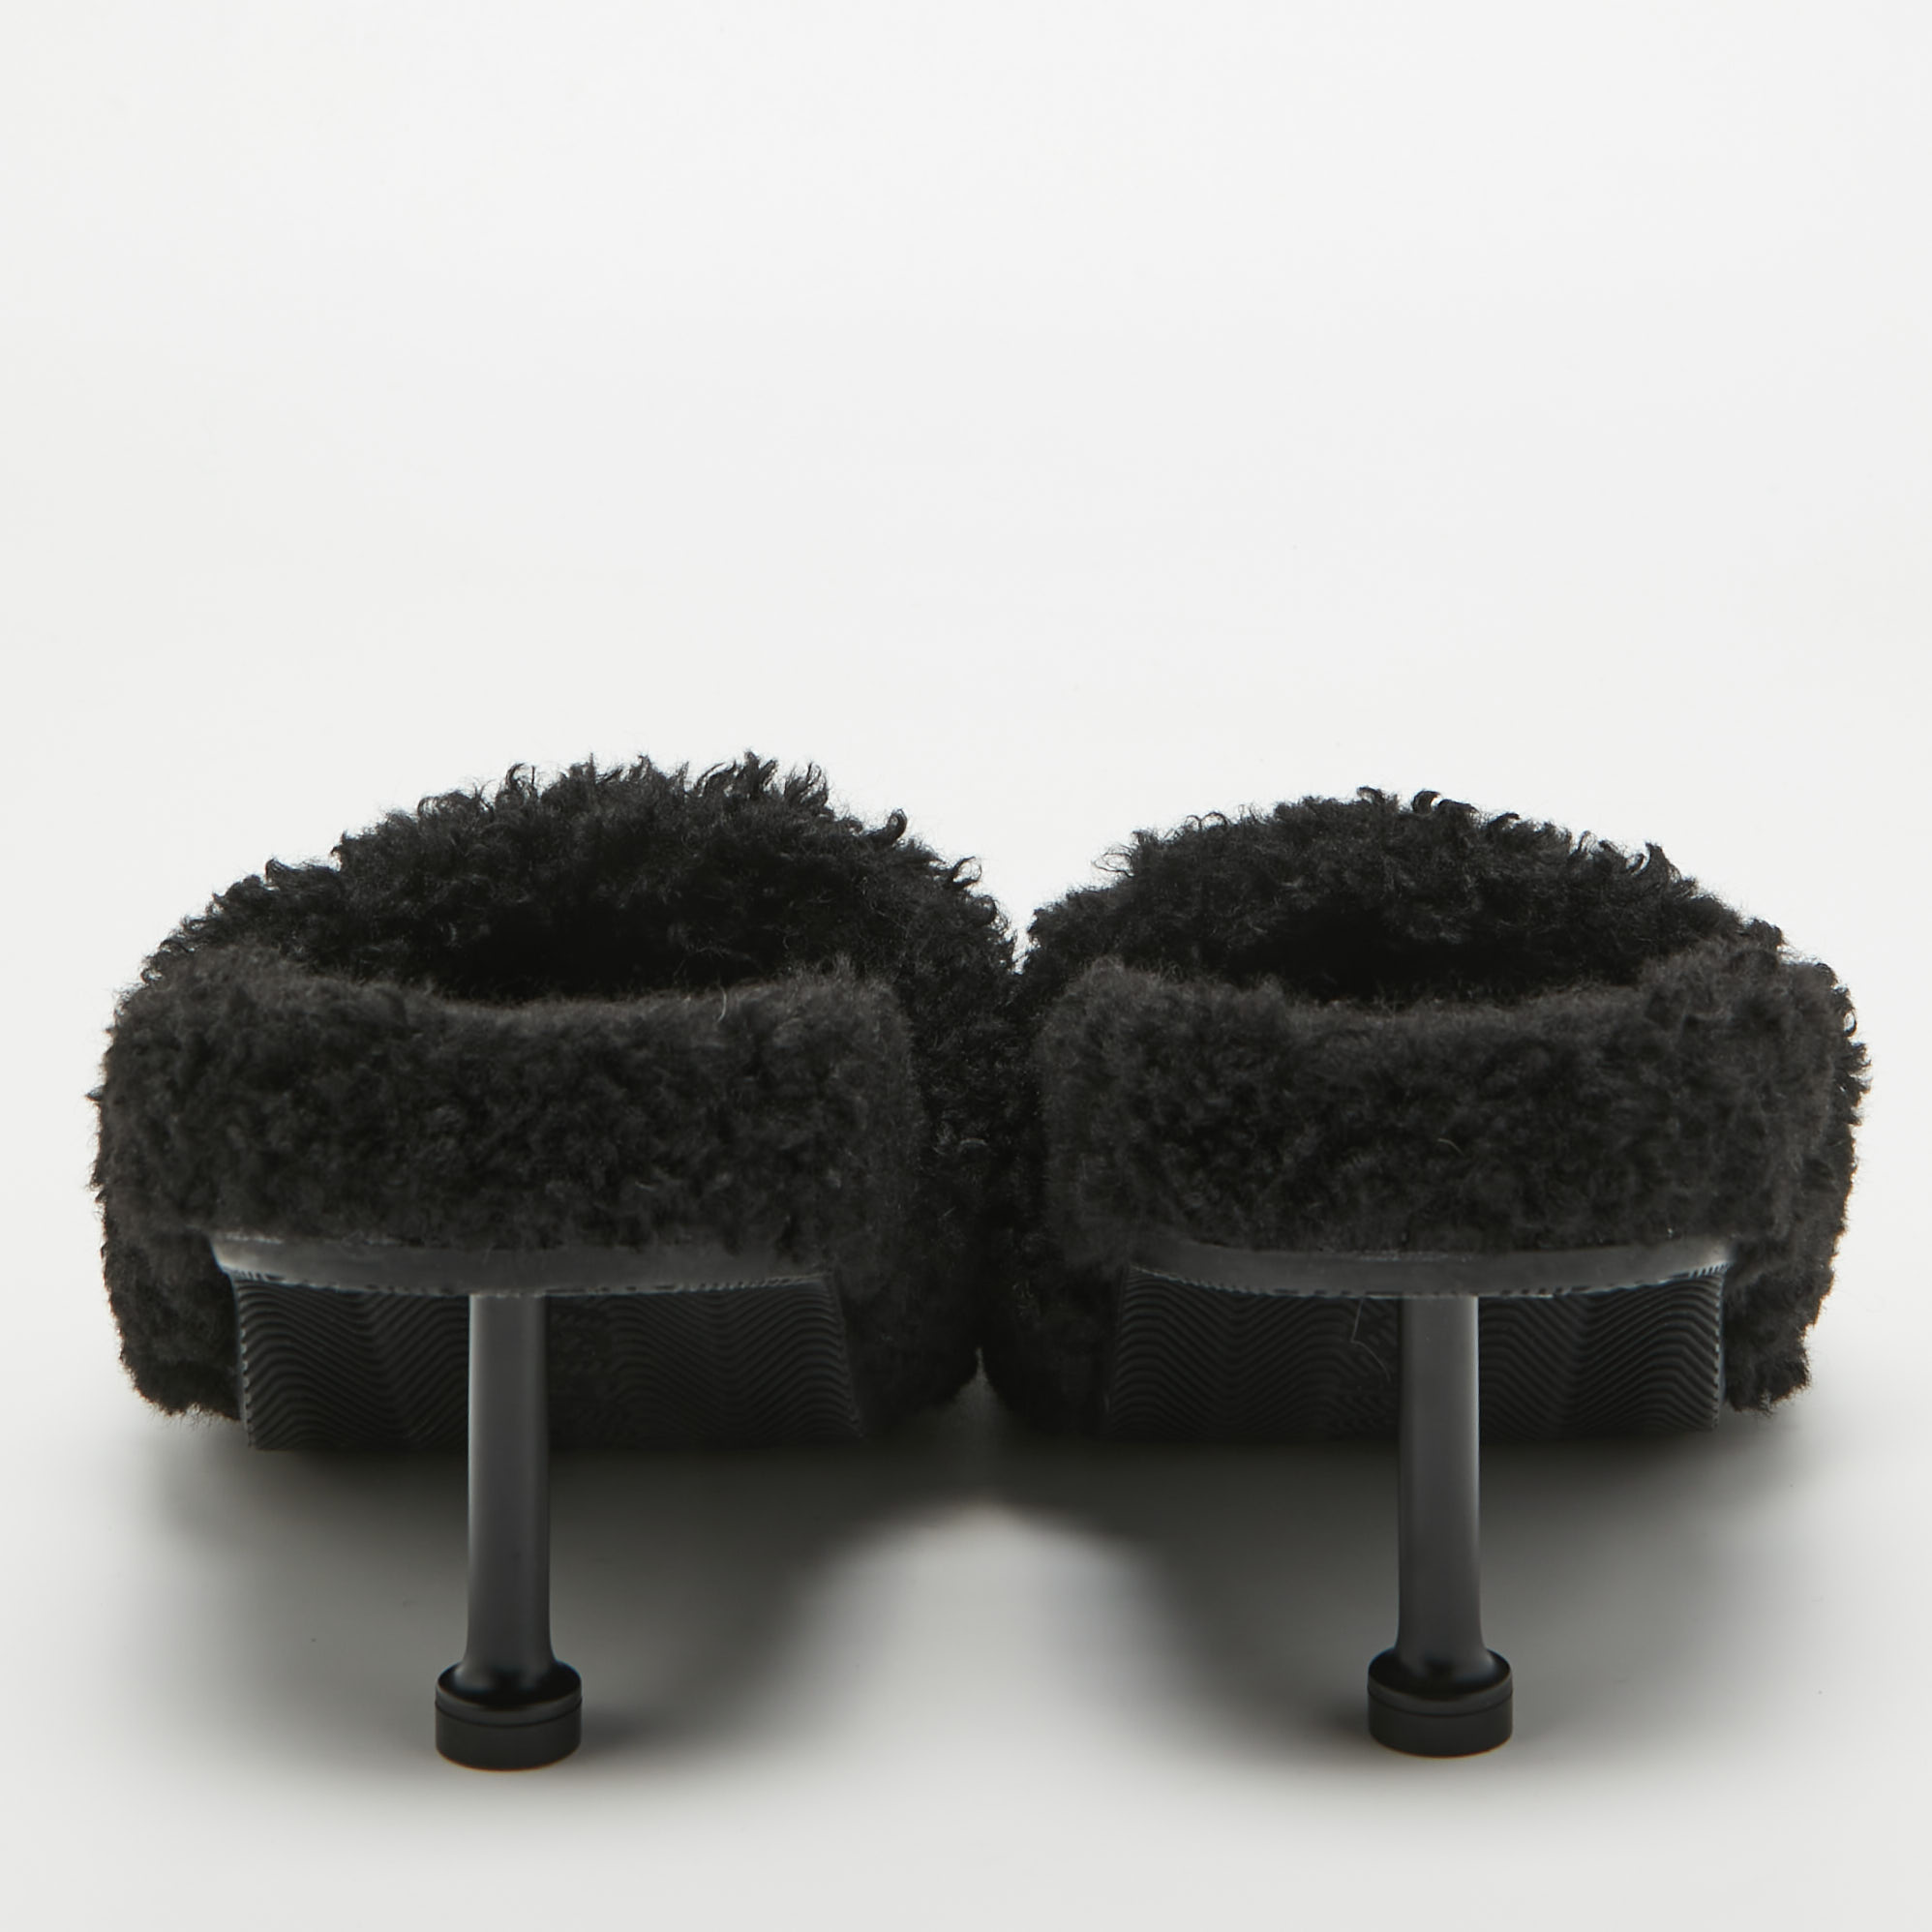 Balenciaga Black Faux Shearling Fur Furry Slide Sandals Size 36